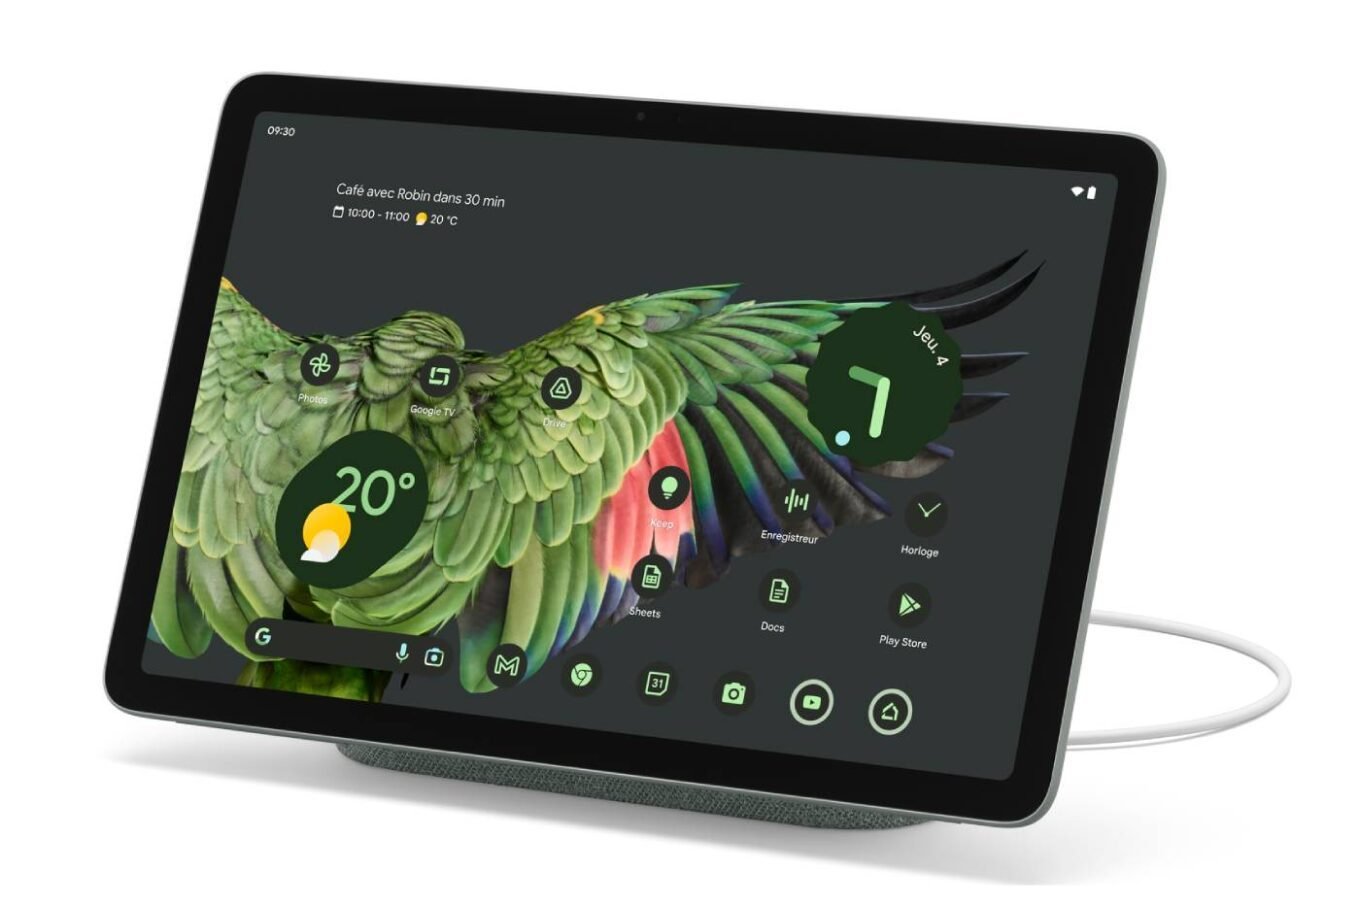 Test Samsung Galaxy Tab S5e : la meilleure tablette Android - Les